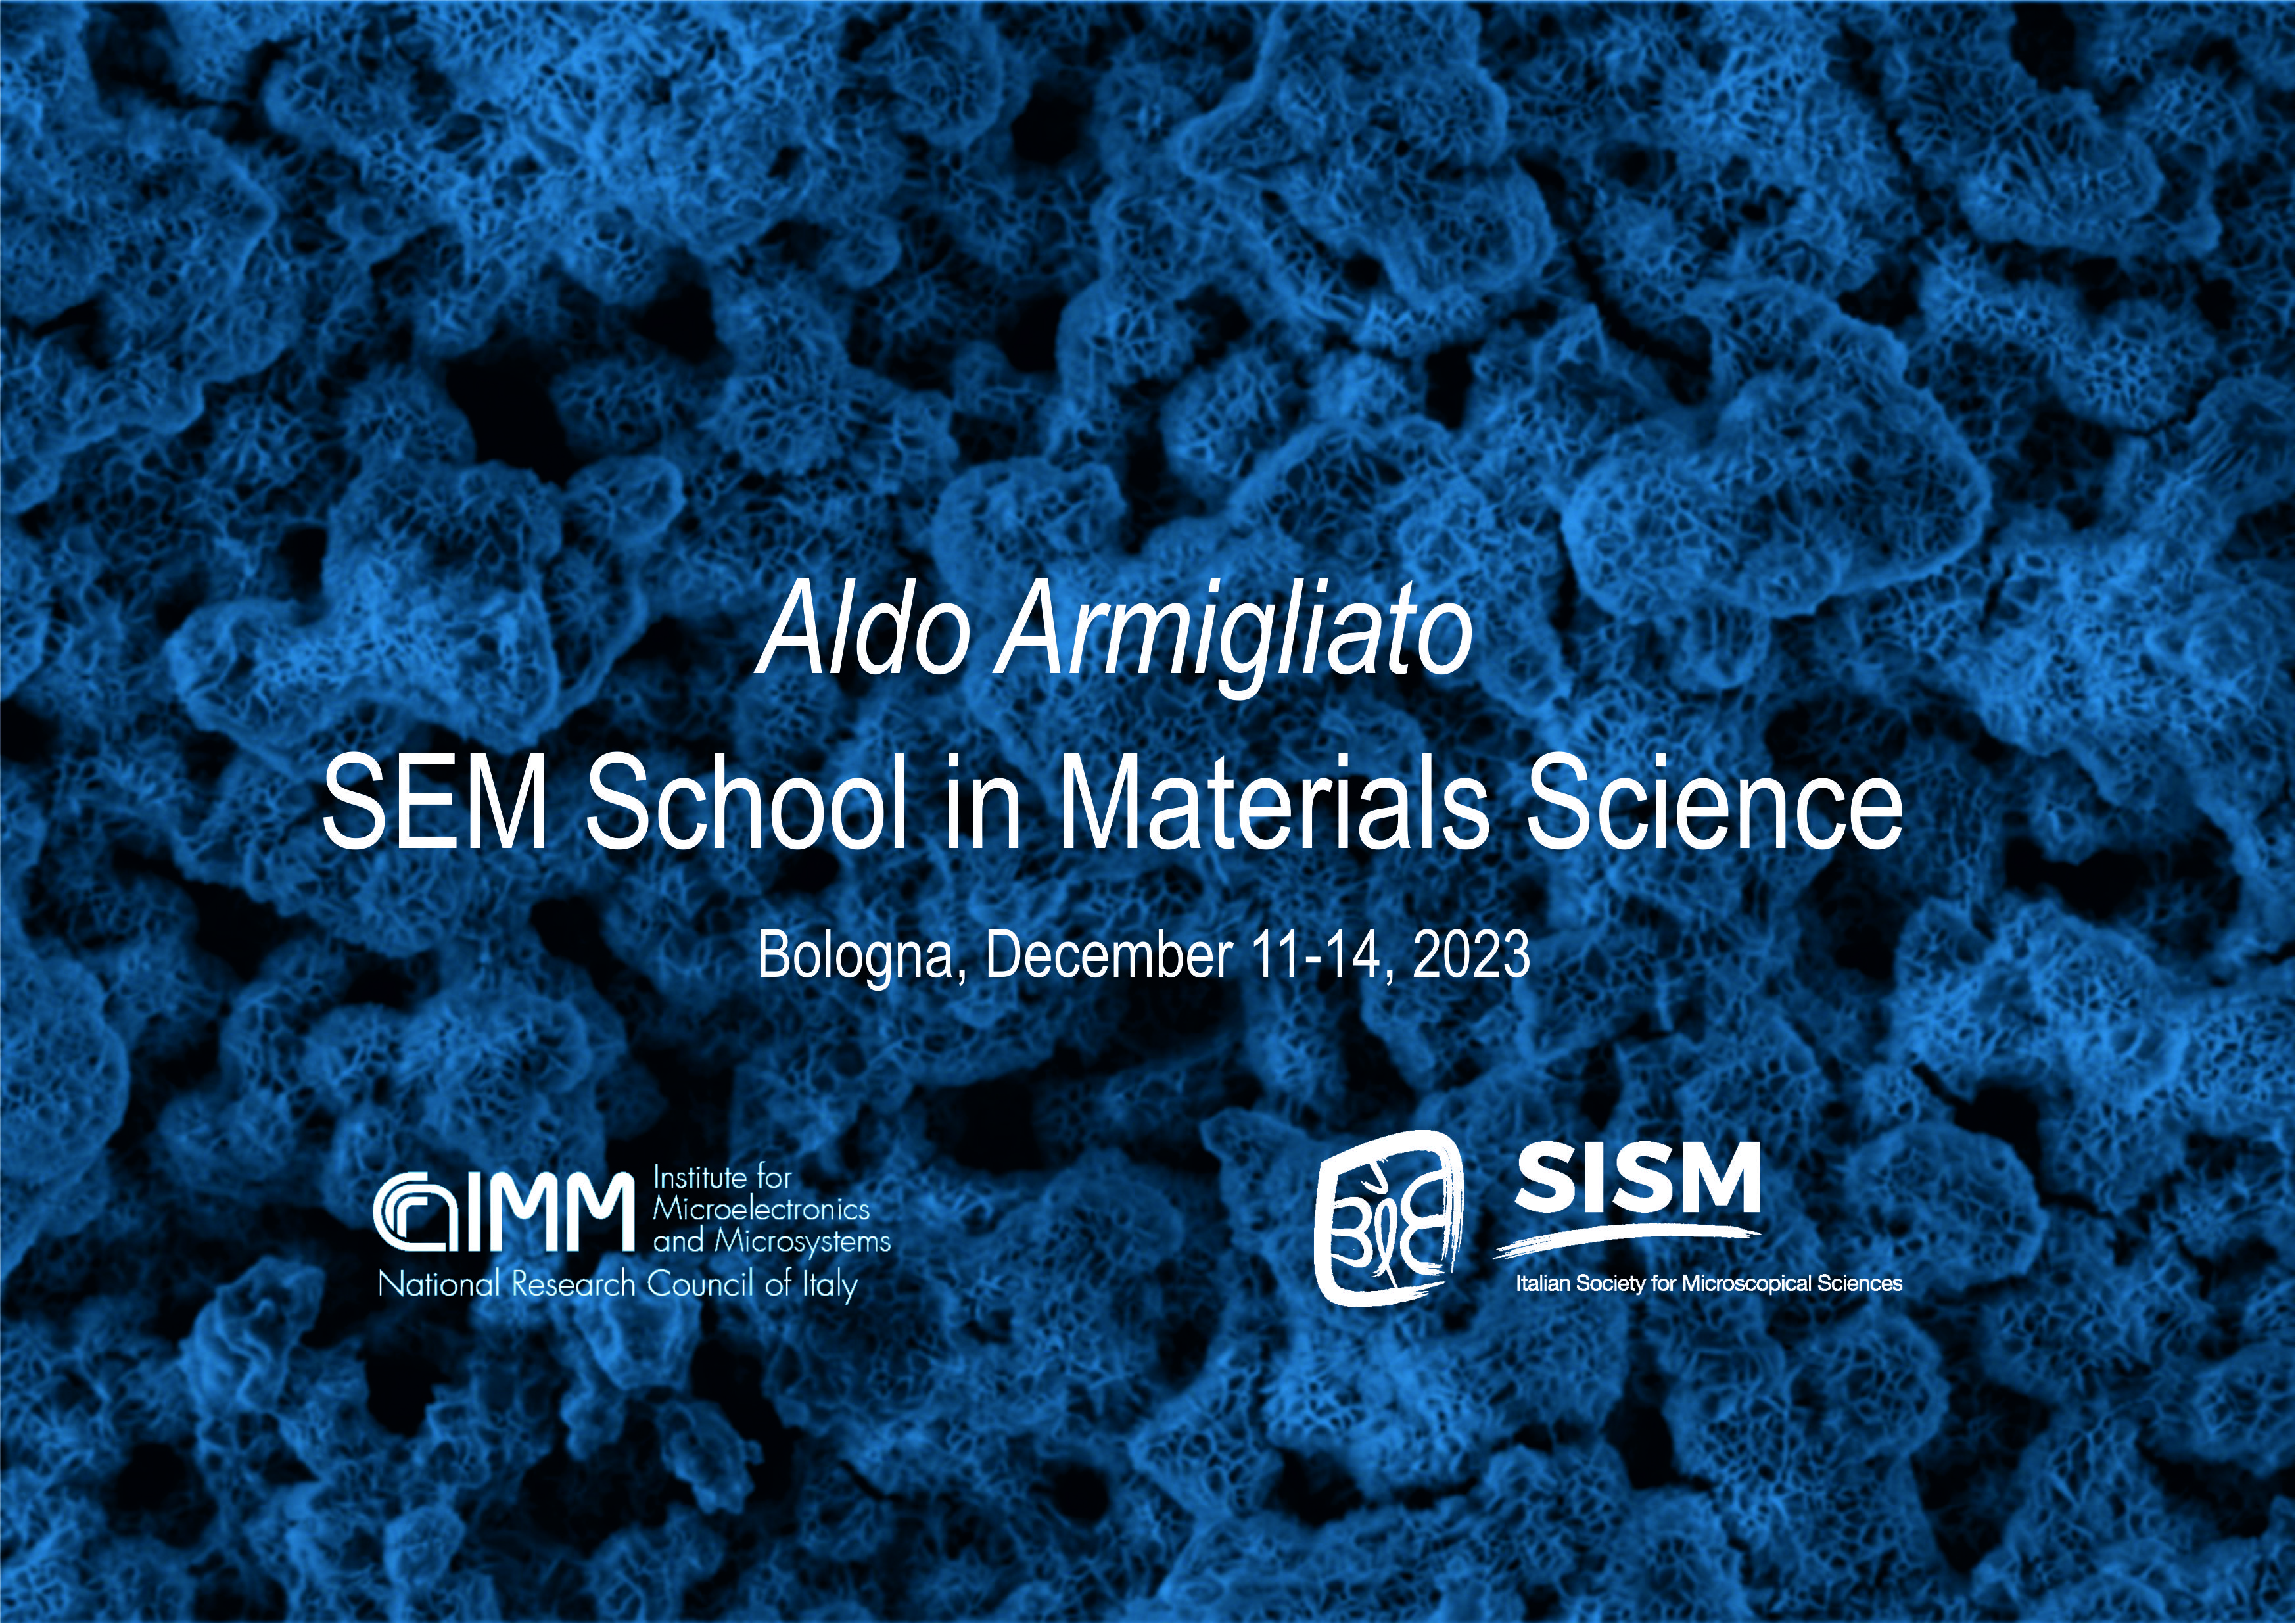 Aldo Armigliato SEM School in Materials Science - 2023 edition